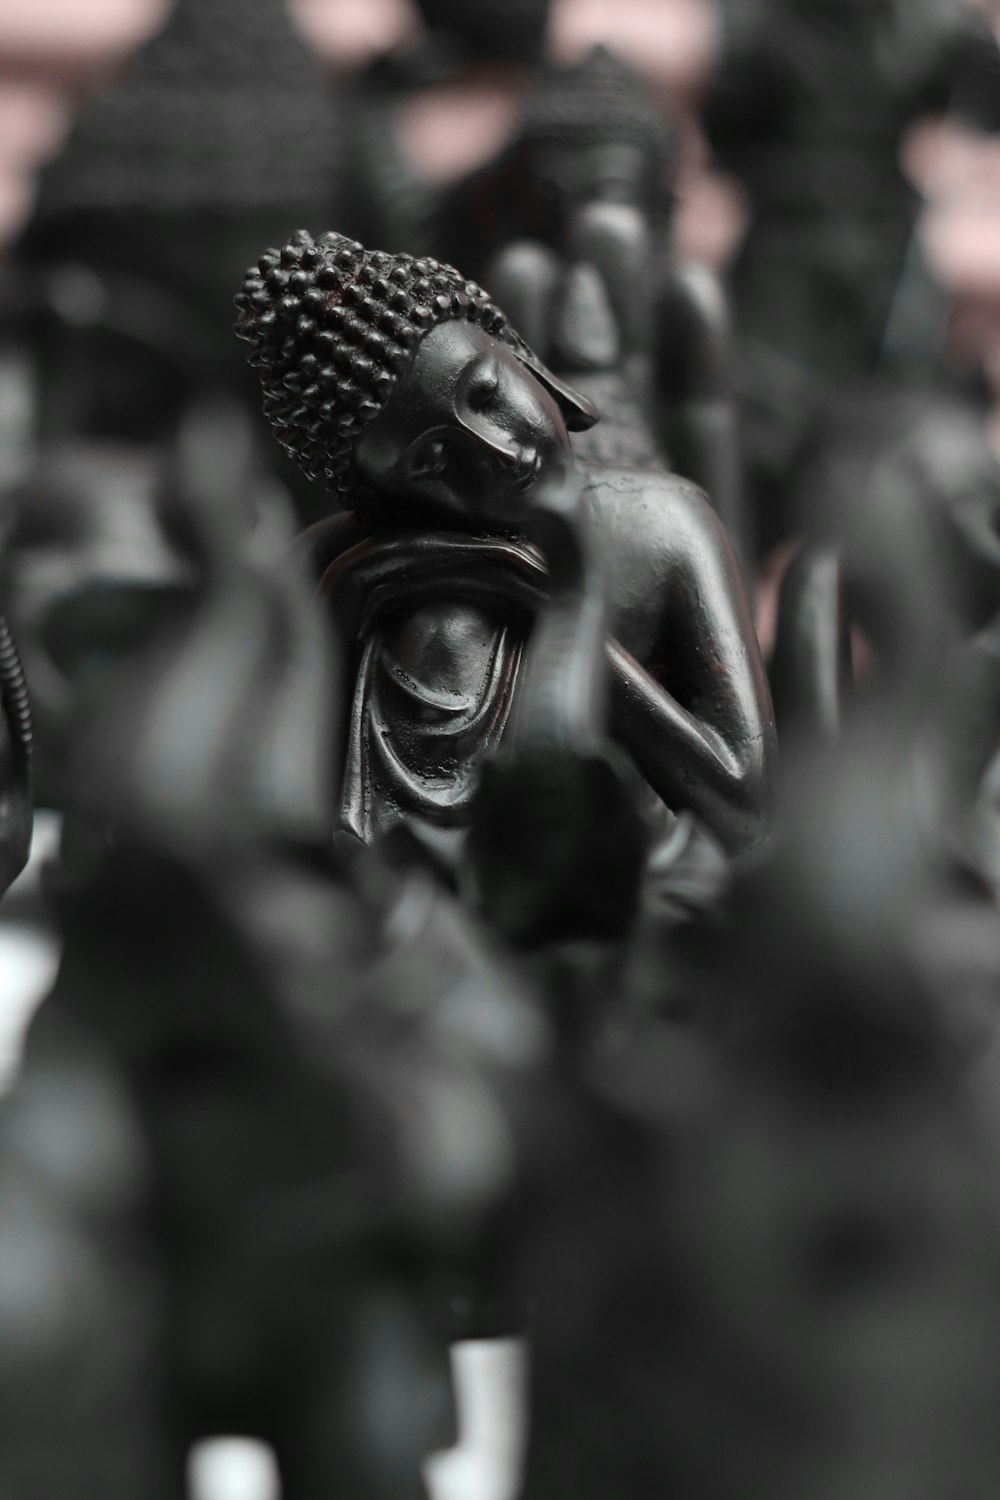 a black and white photo of buddha statues